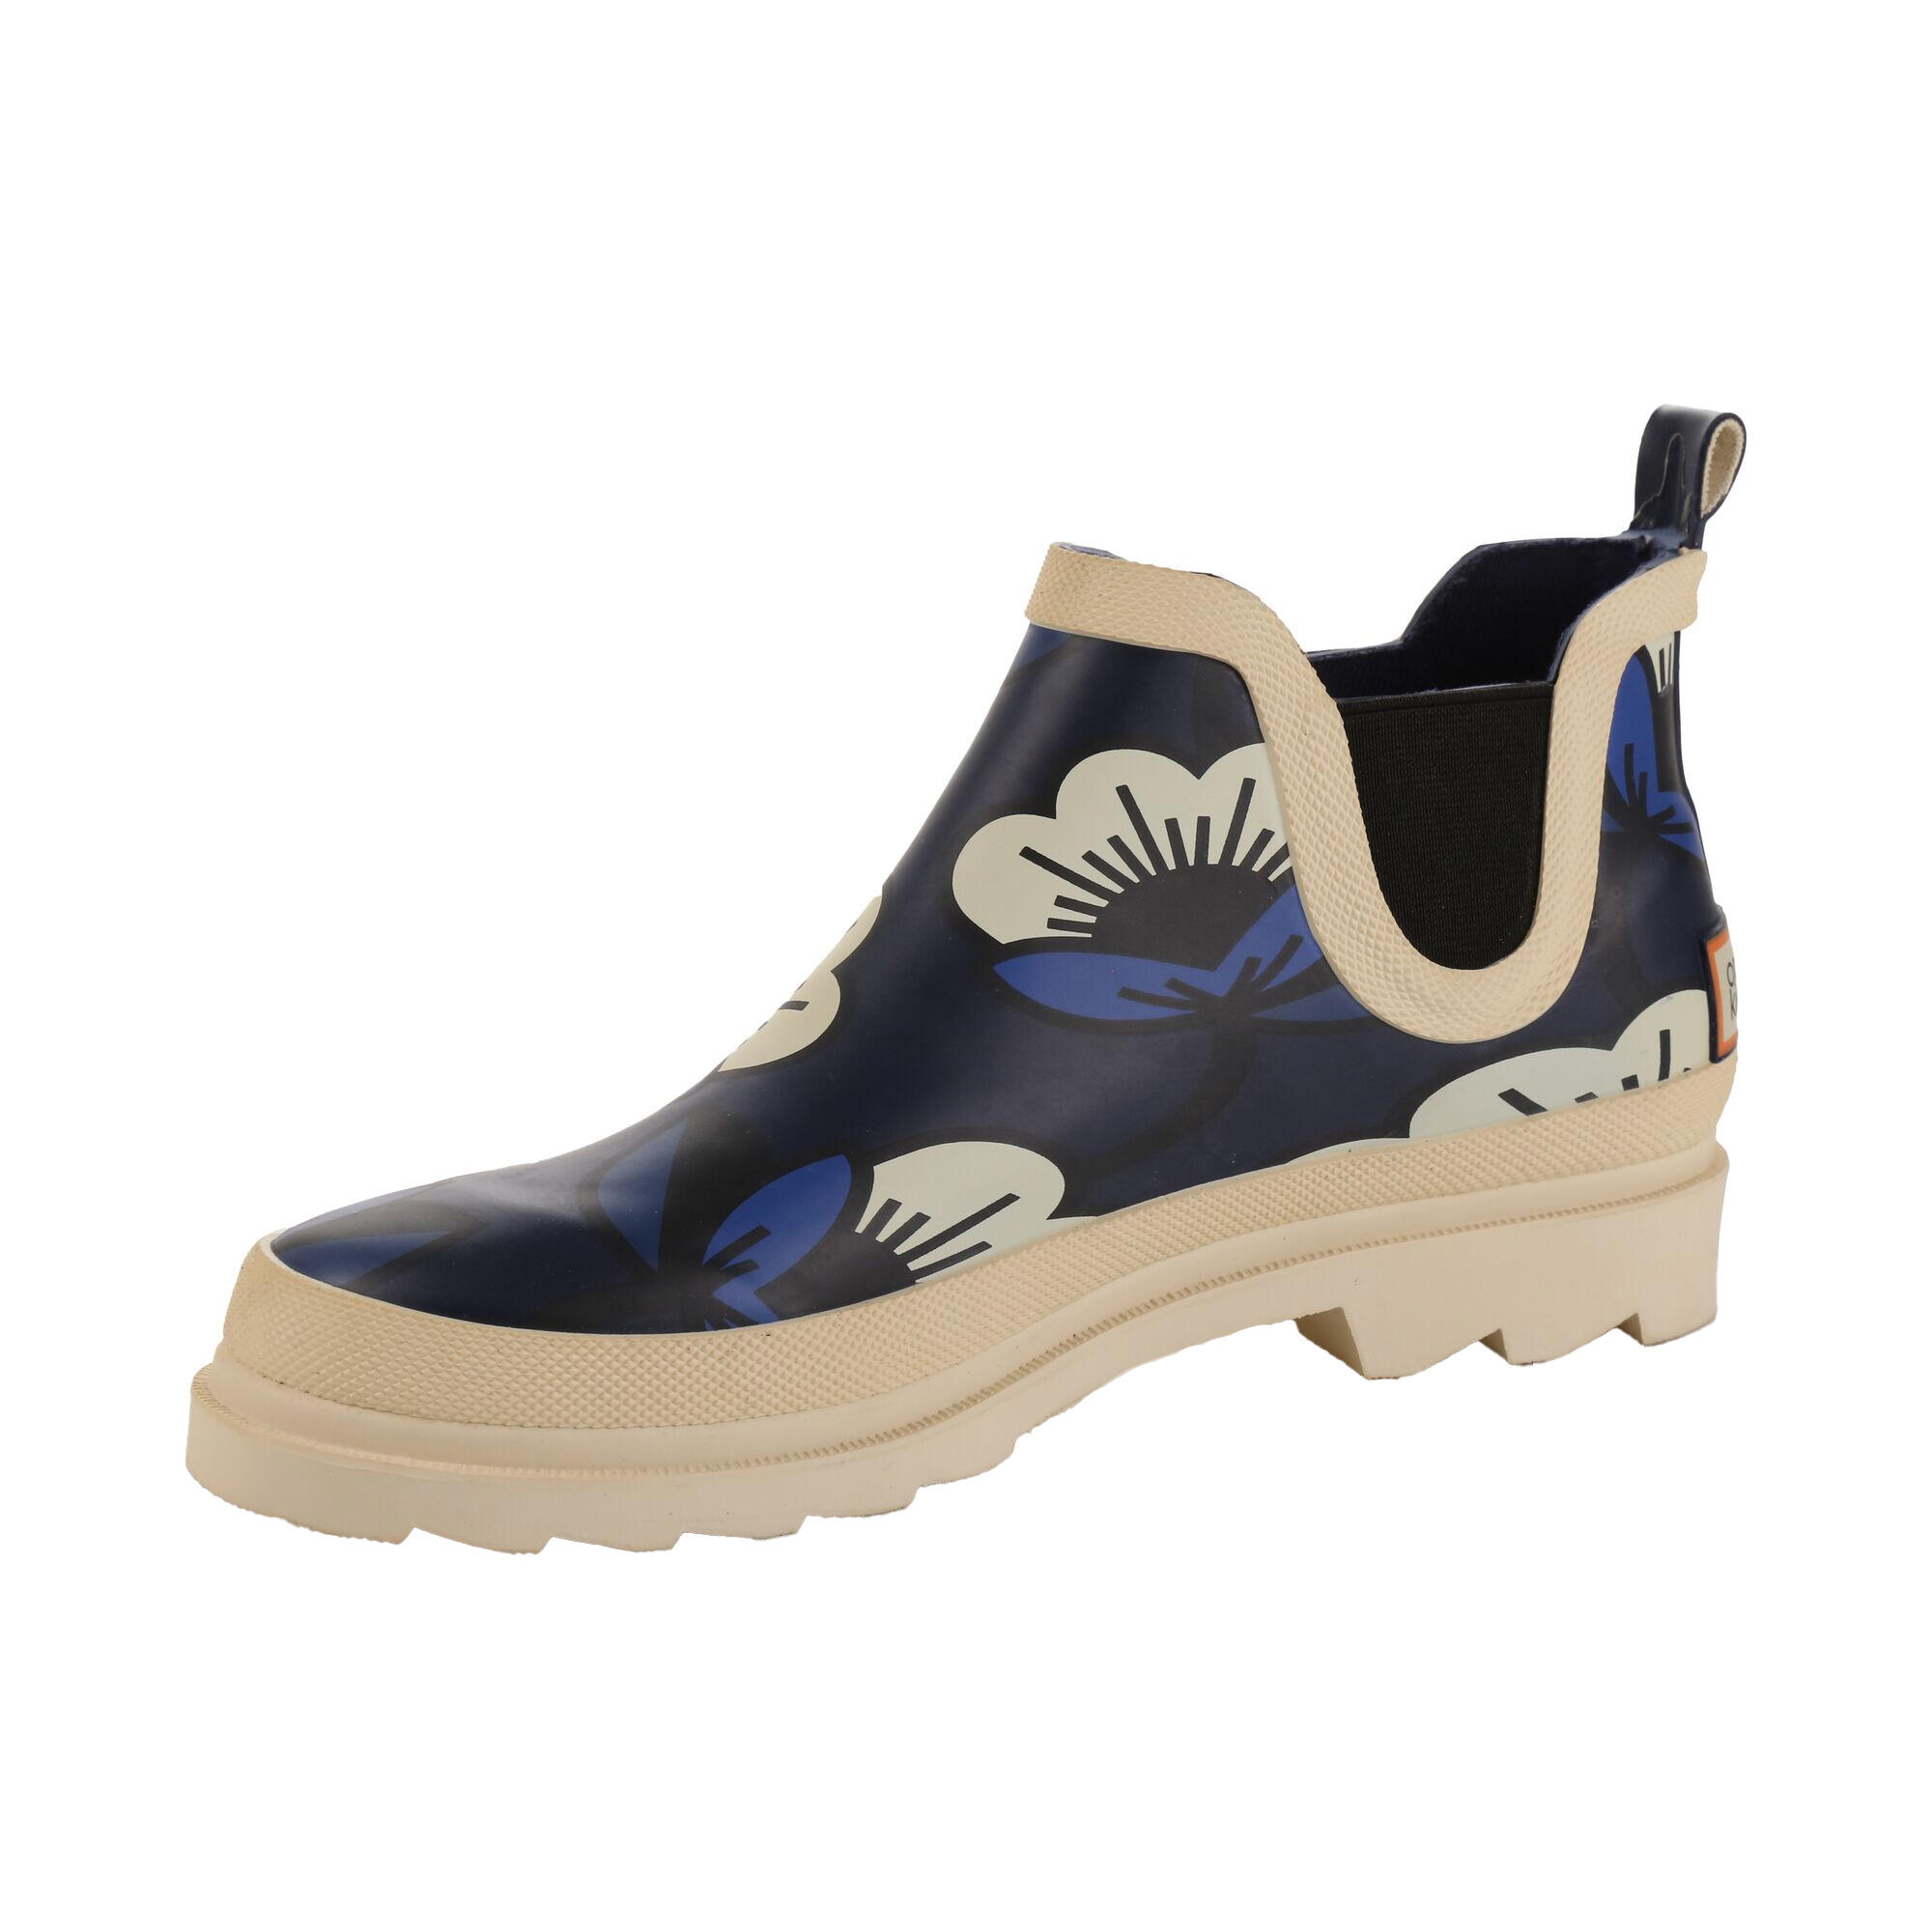 Womens/Ladies Orla Kiely Passion Flower Wellington Boots (Navy/Cream) 3/5